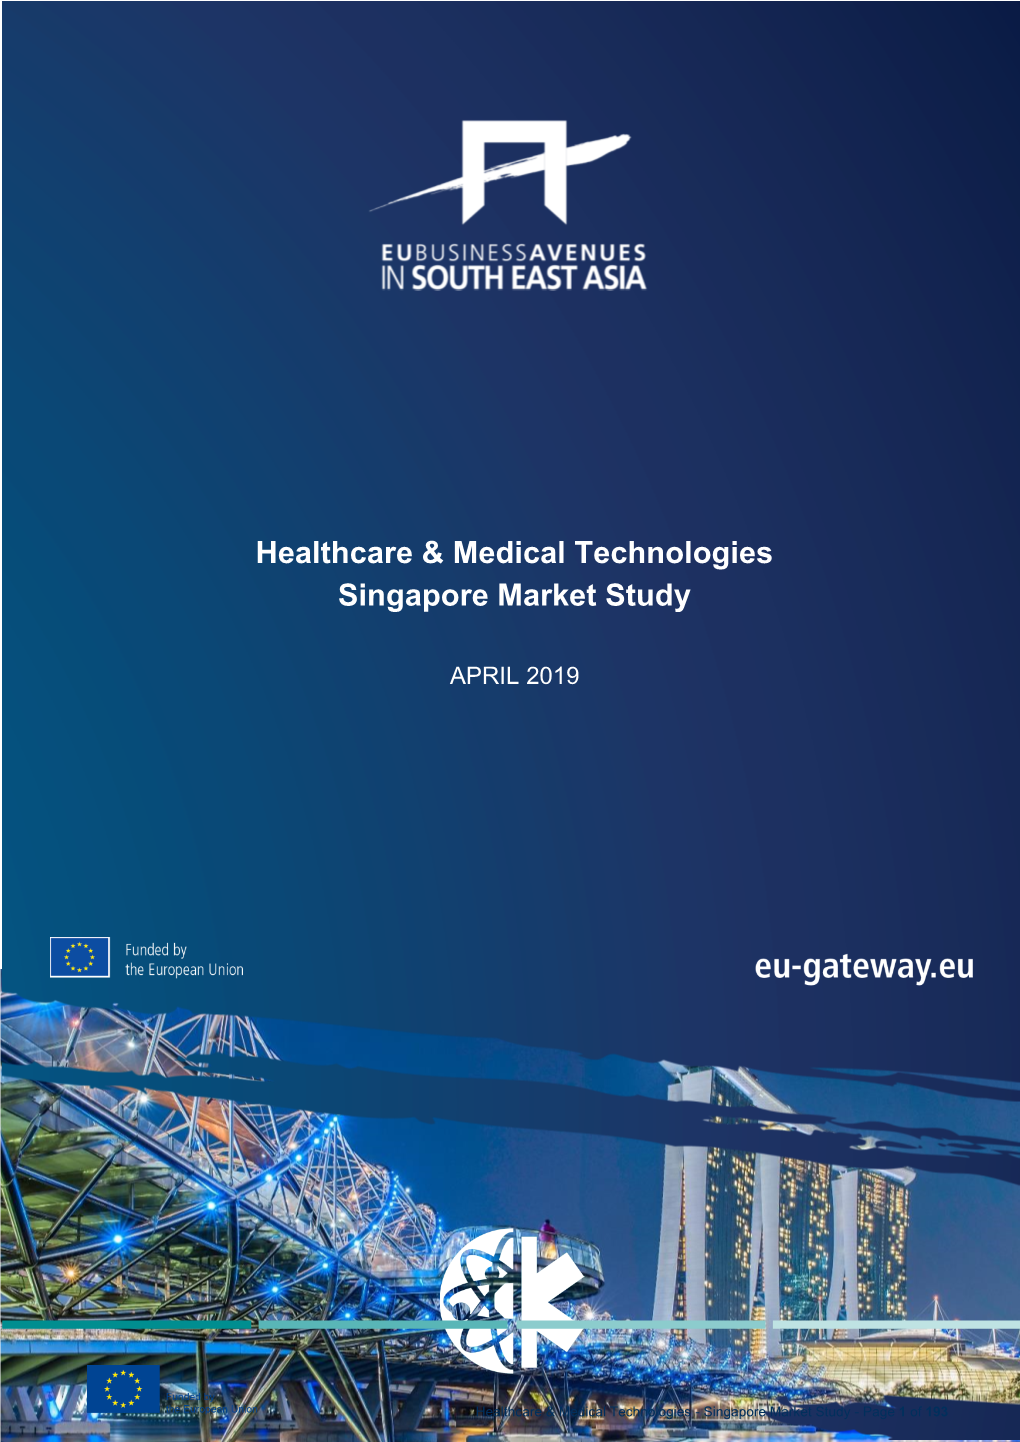 Healthcare & Medical Technologies (Singapore Market Study)